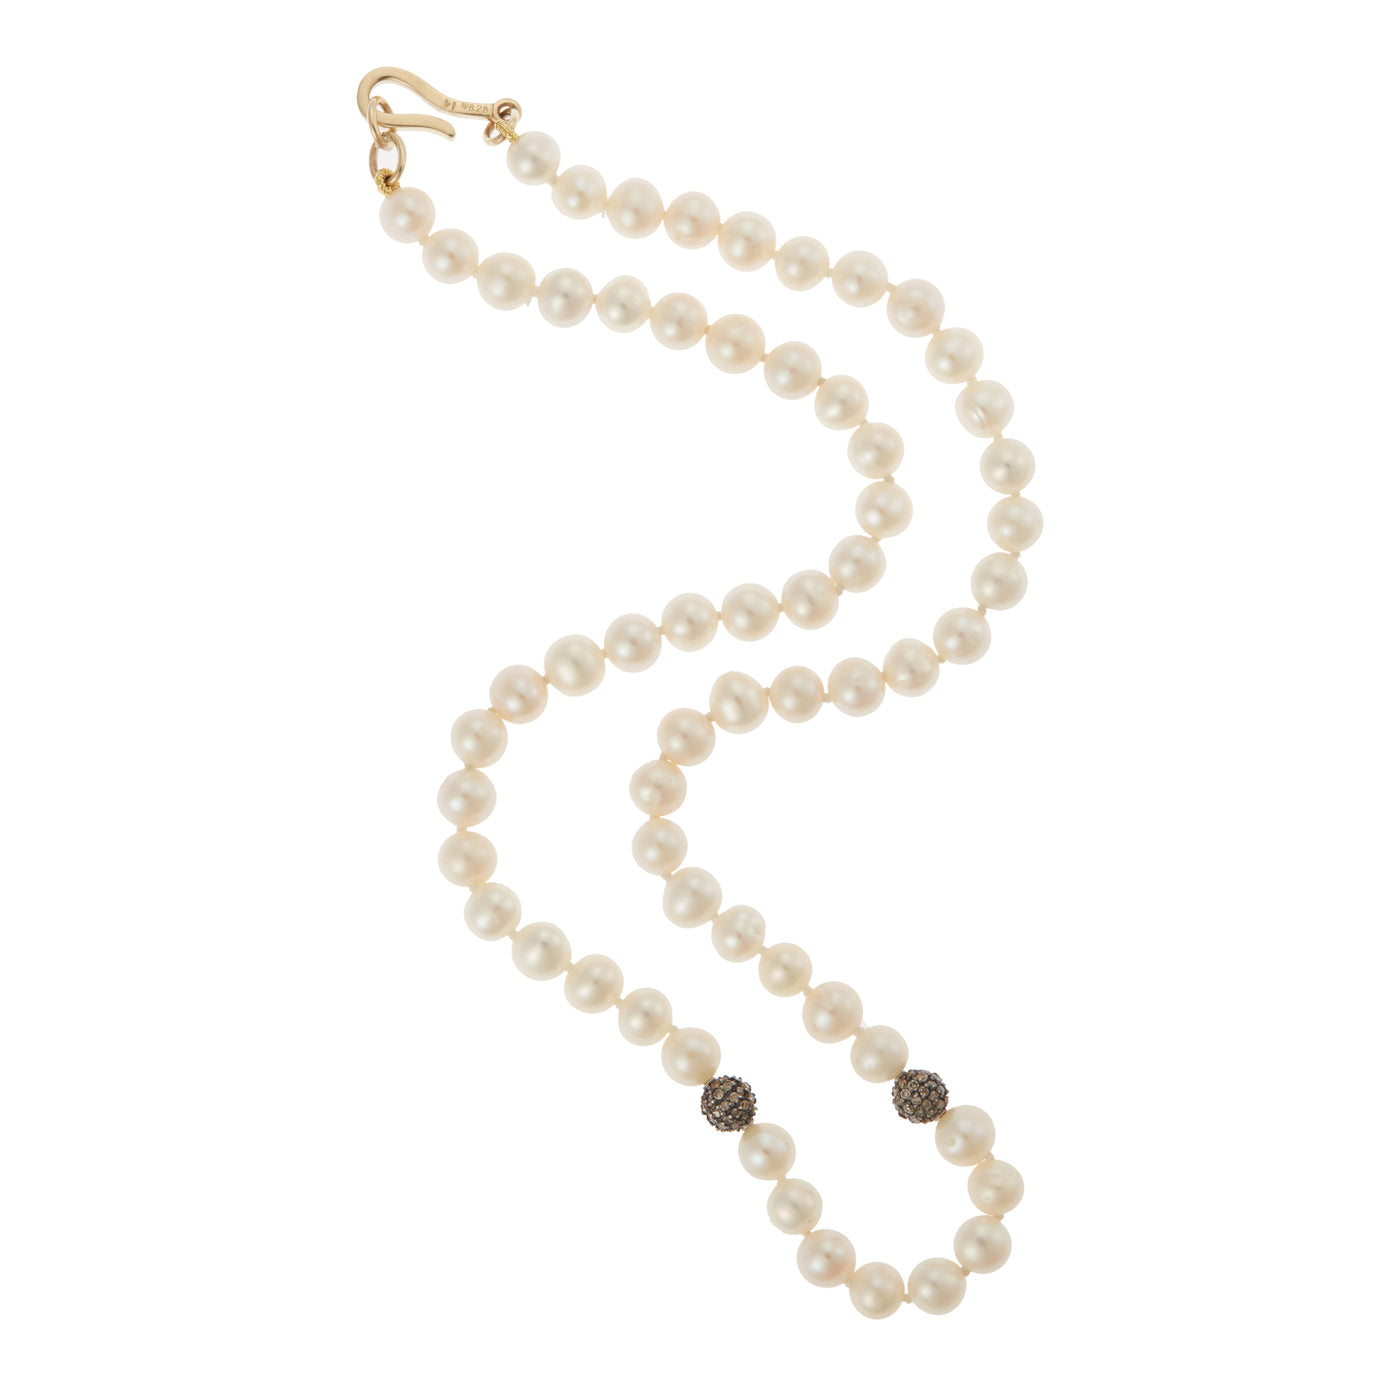 Pearl Diamond Ball Necklace - Ileana Makri